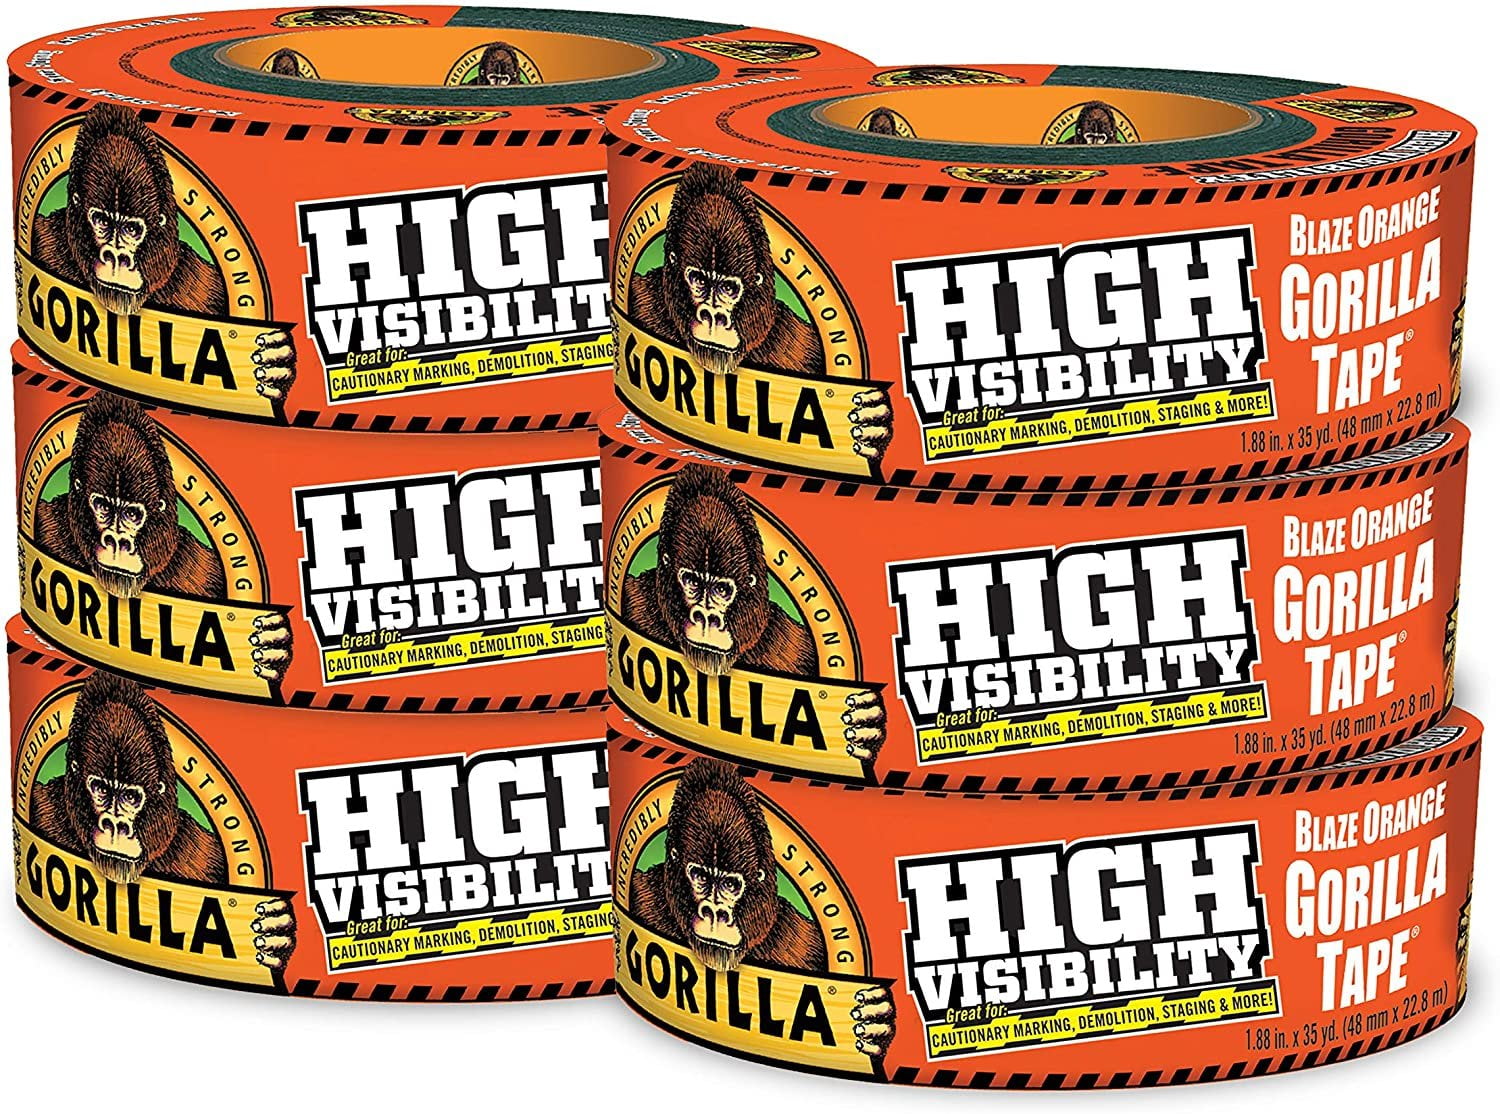 Blaze Orange, 1.88" x 35 yd Gorilla High Visibility Duct Tape Pack of 1 